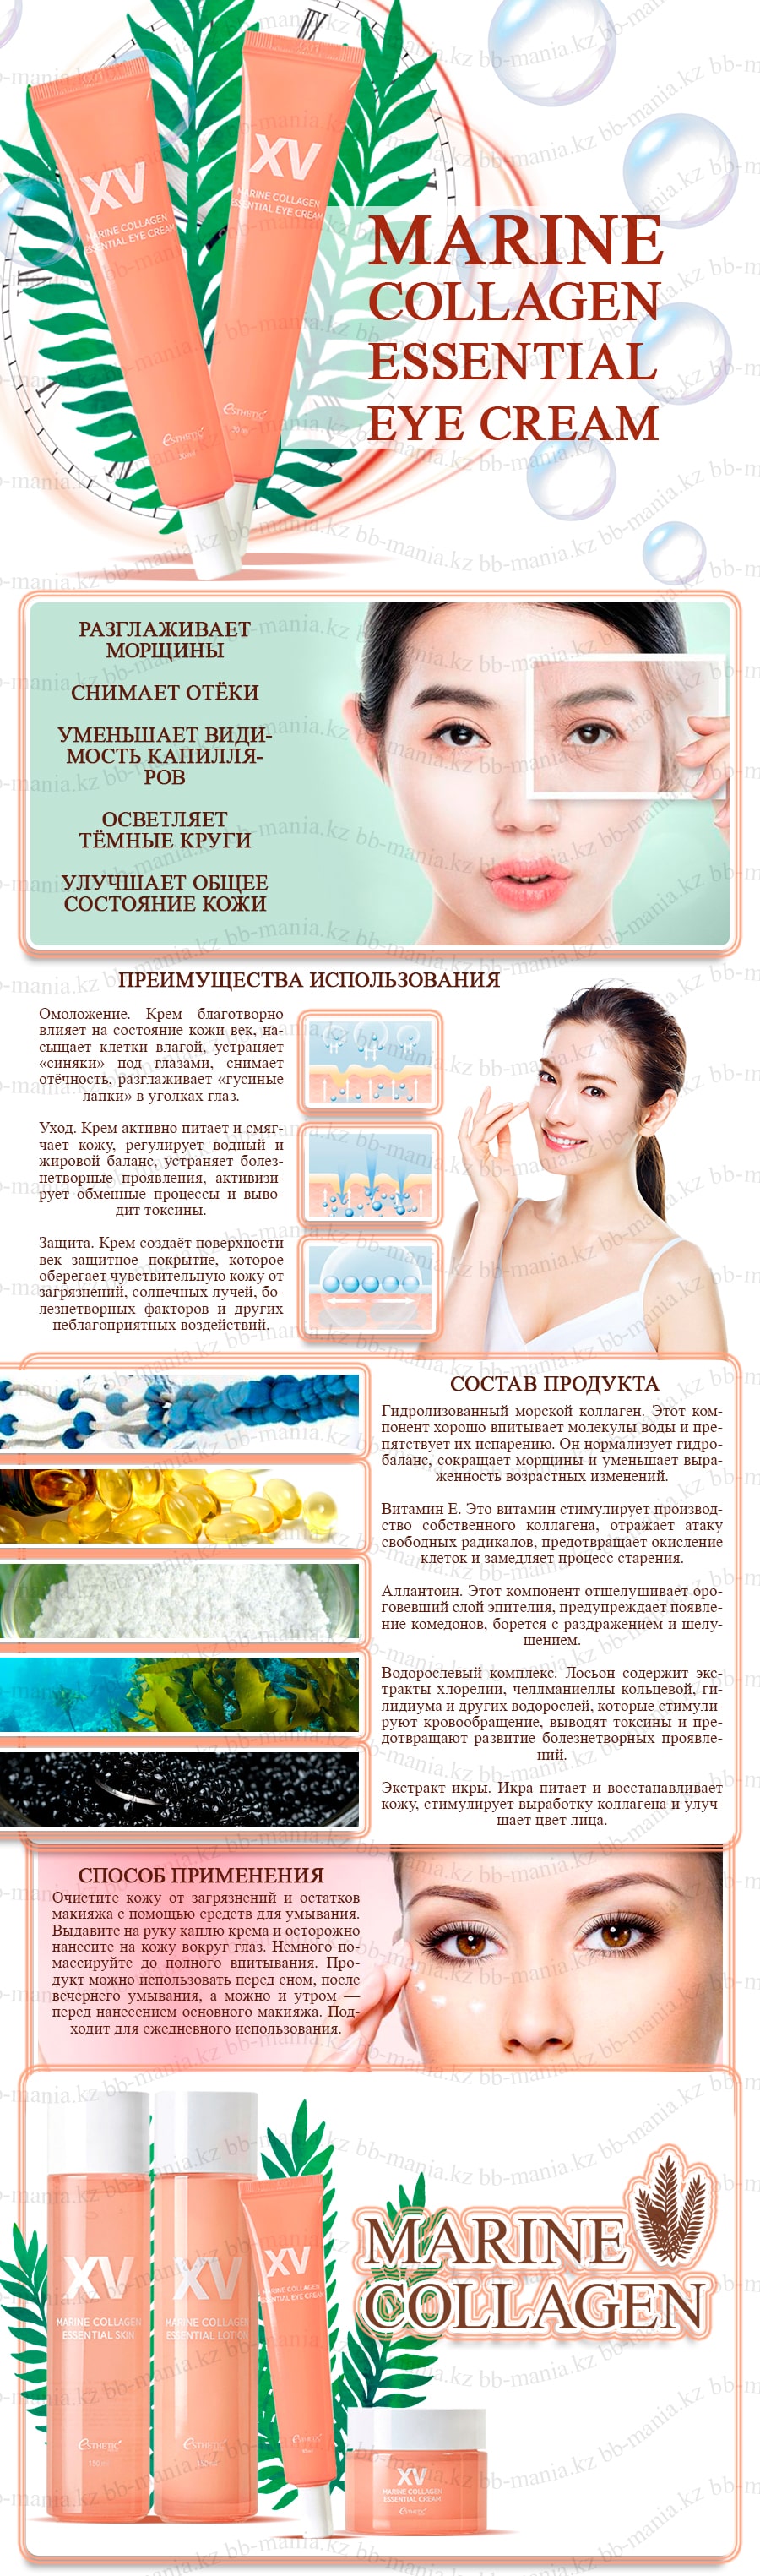 Marine-Collagen-Essential-Eye-Cream-[ESTHETIC-HOUSE]-min